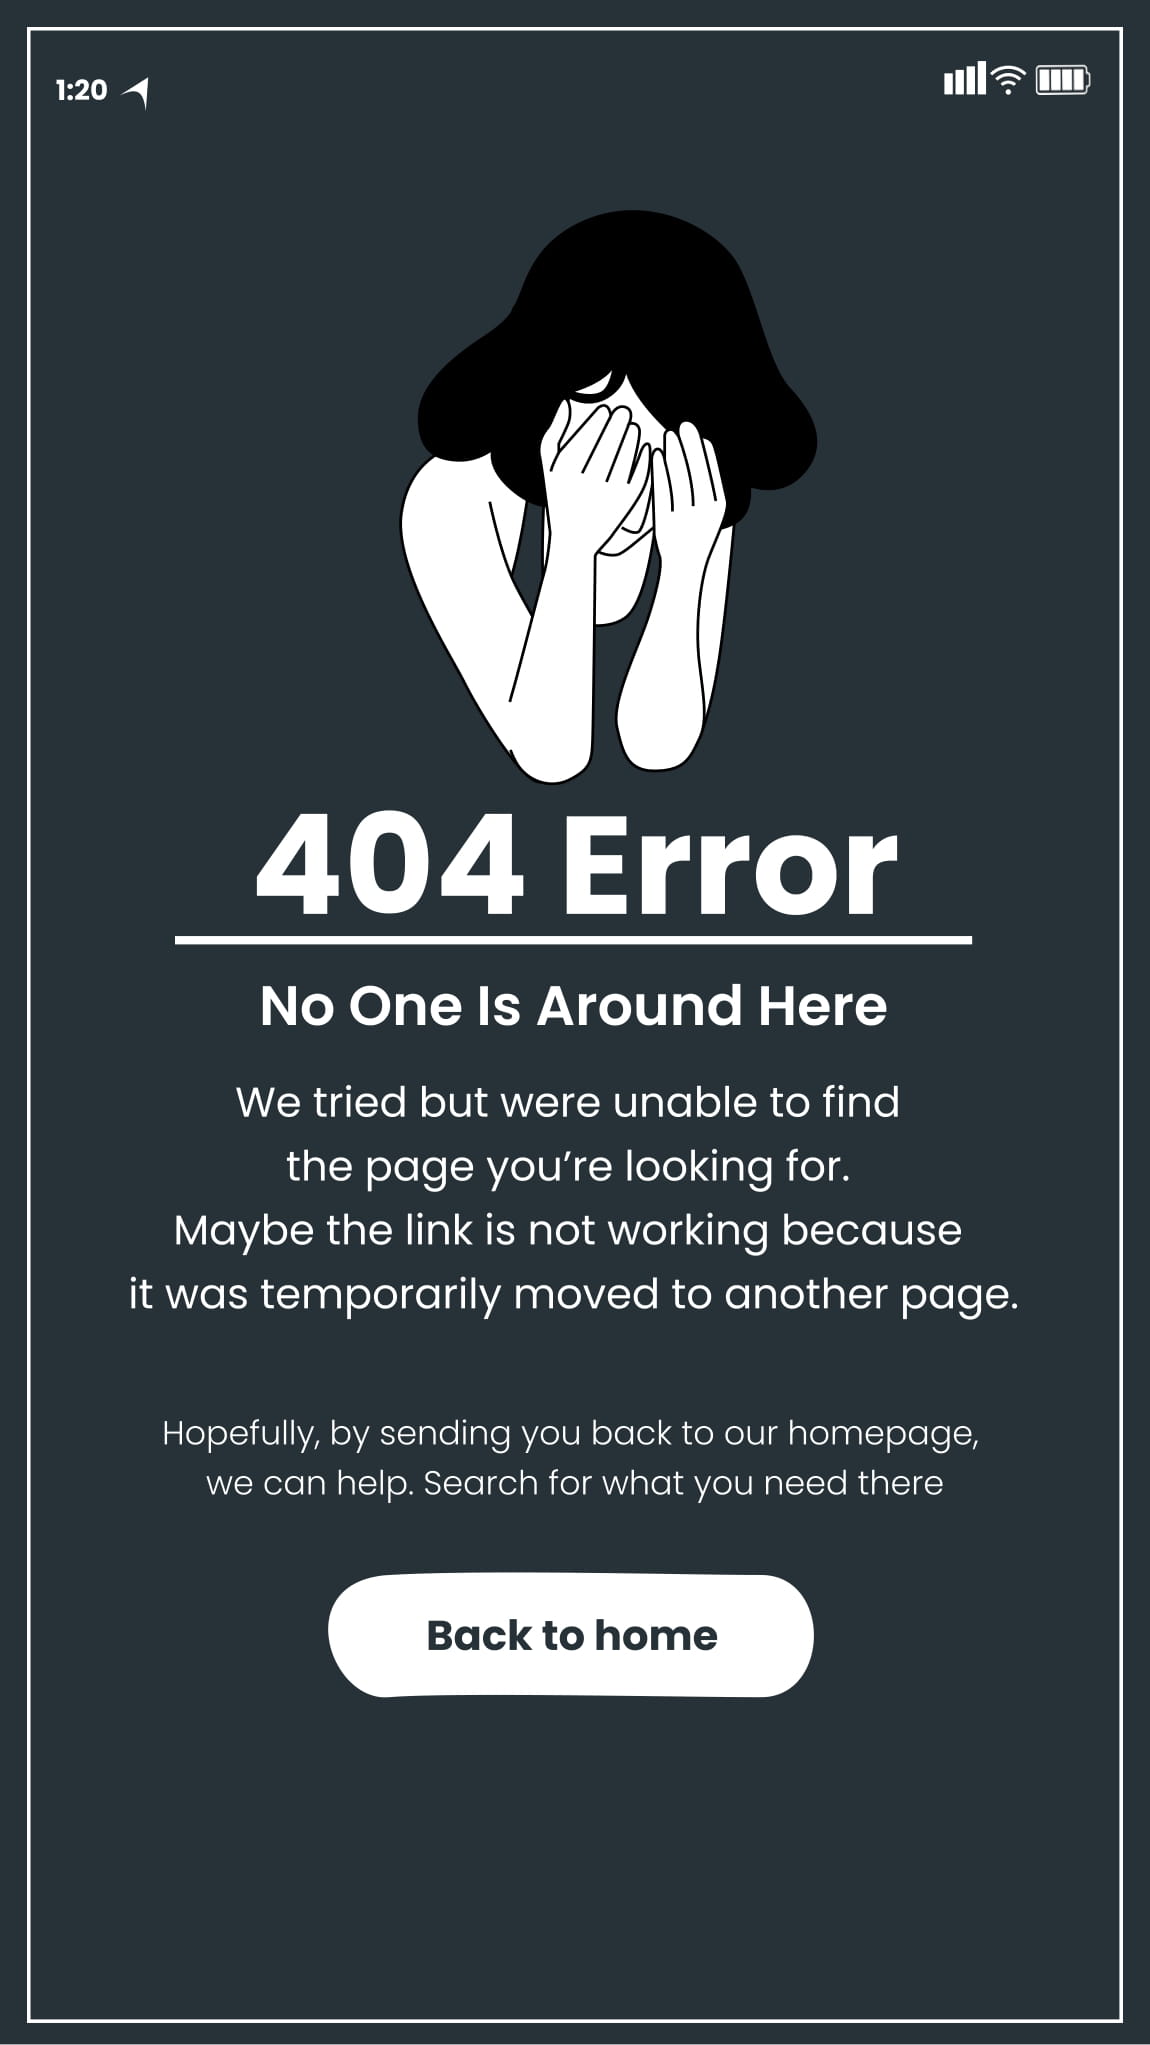 Mobile 404 Error Page